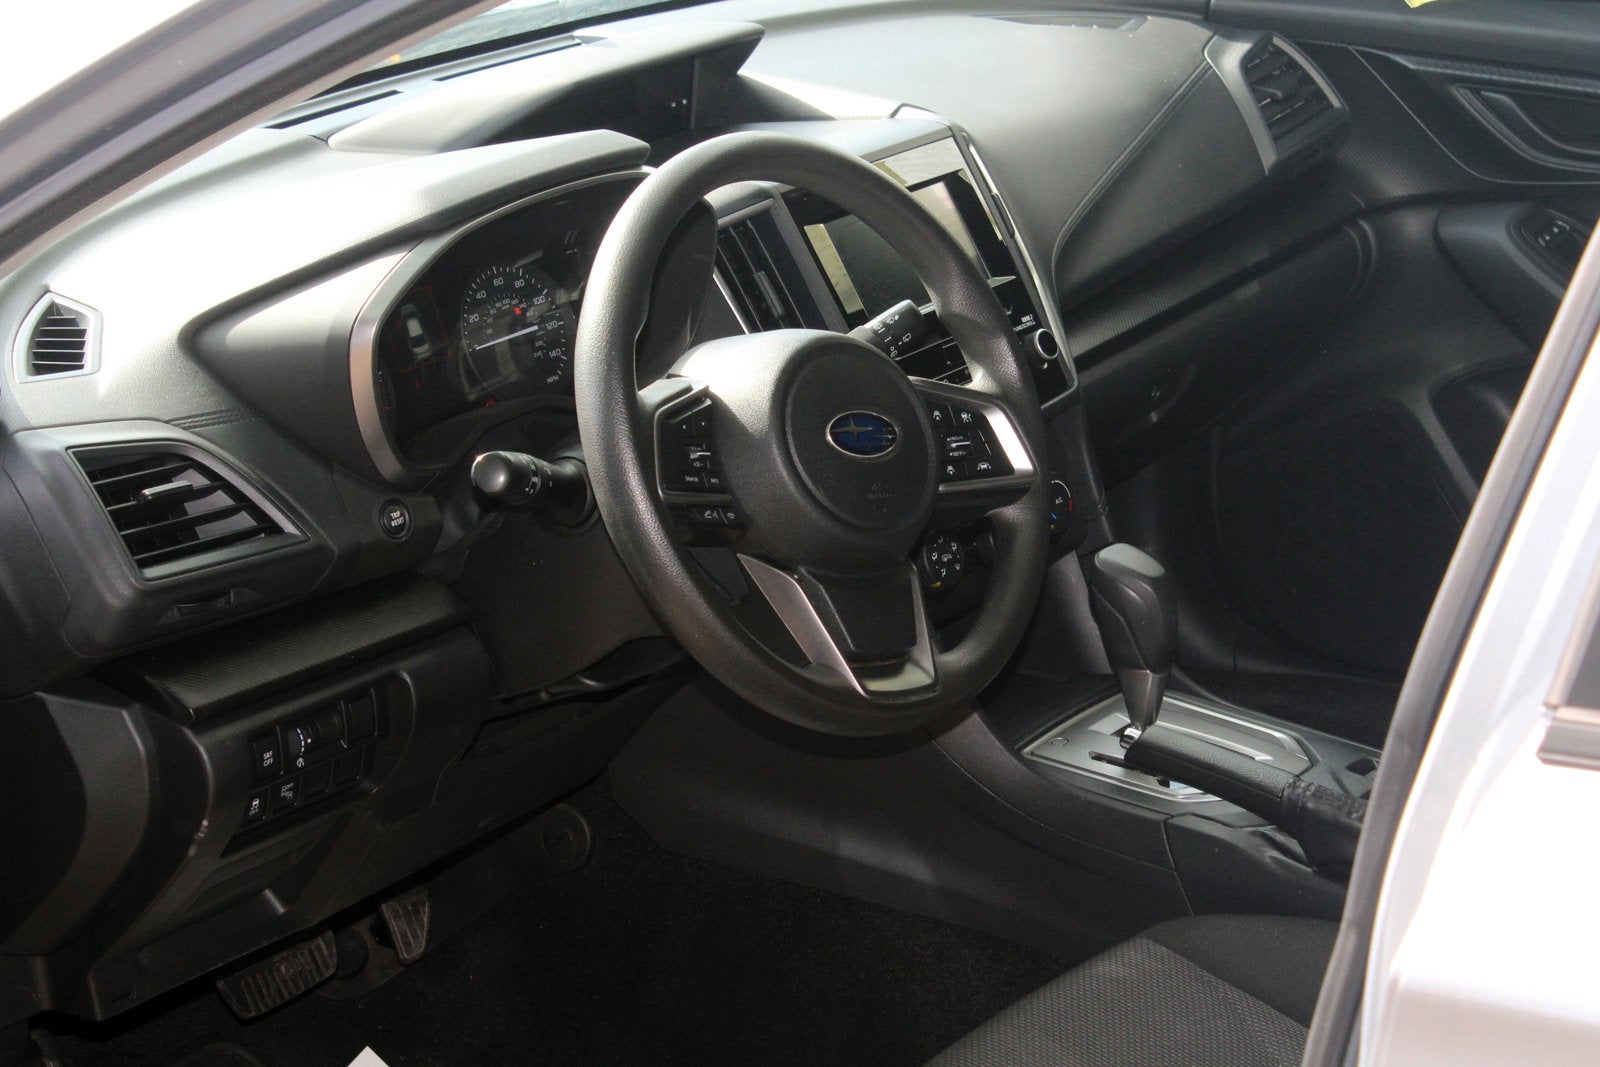 2019 Subaru Impreza Premium